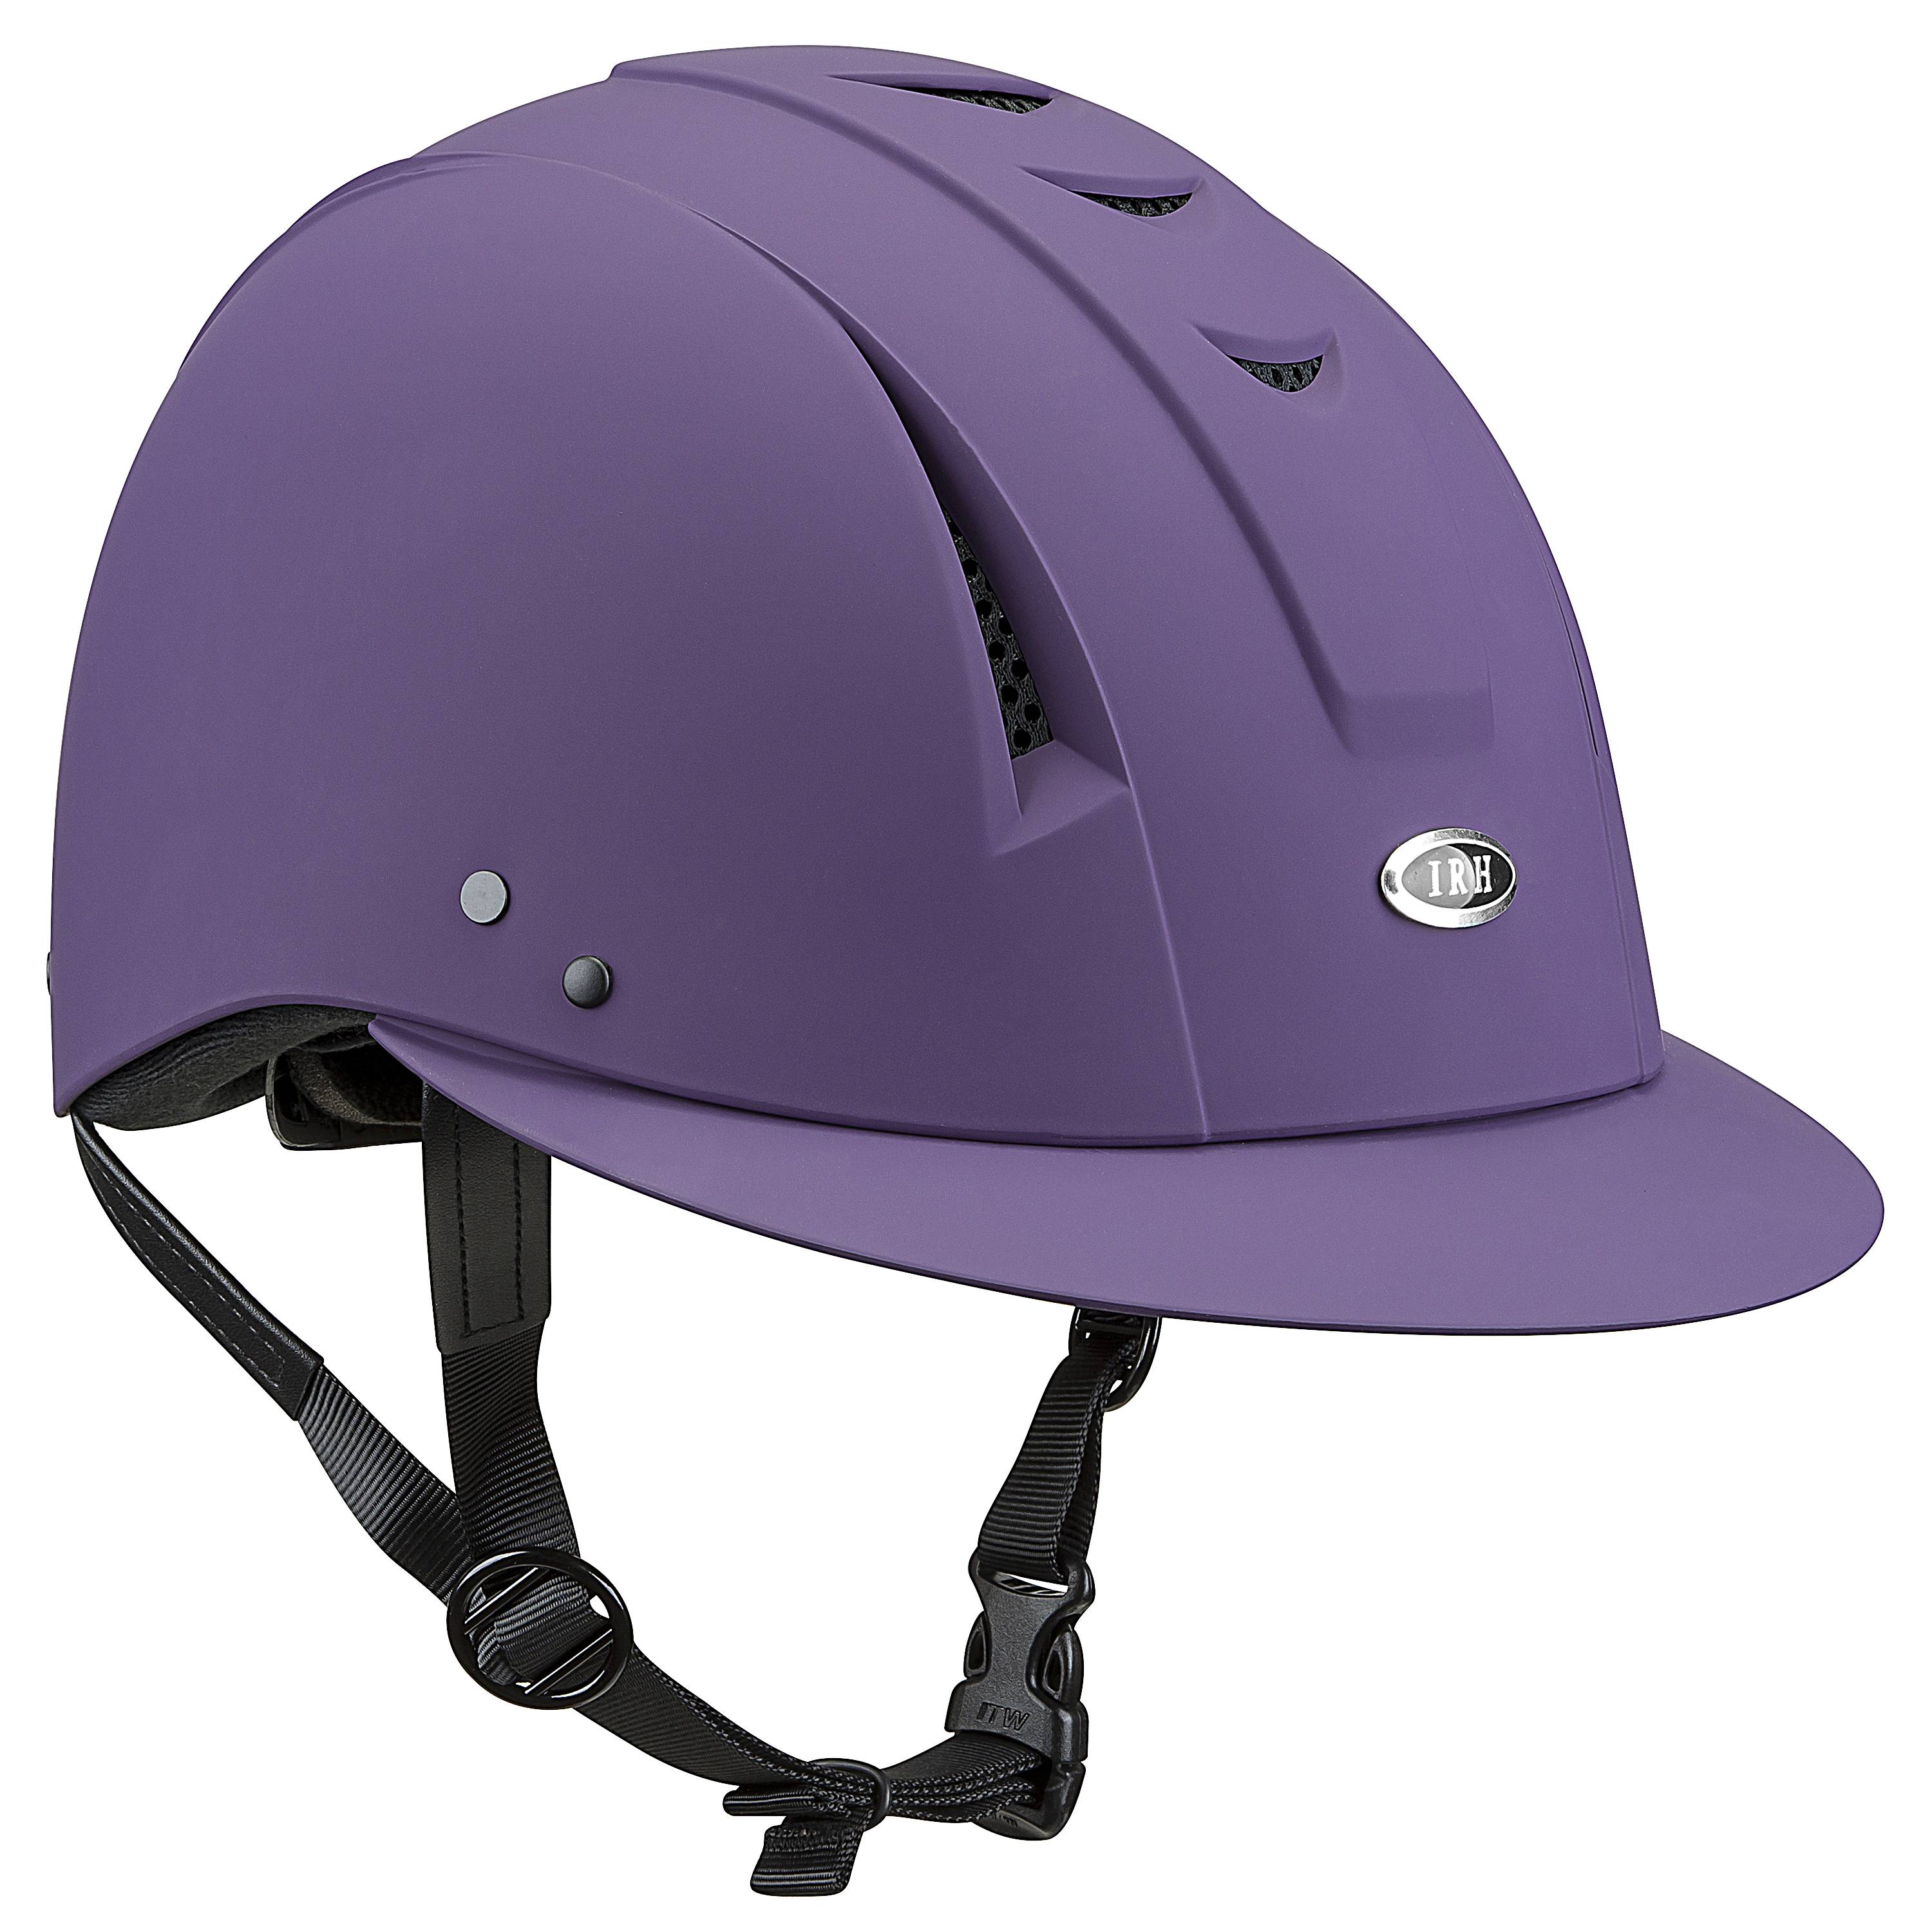 134215 IRH Equi-Pro SV Dial-Fit-System Helmet with Sun Vi sku 134215